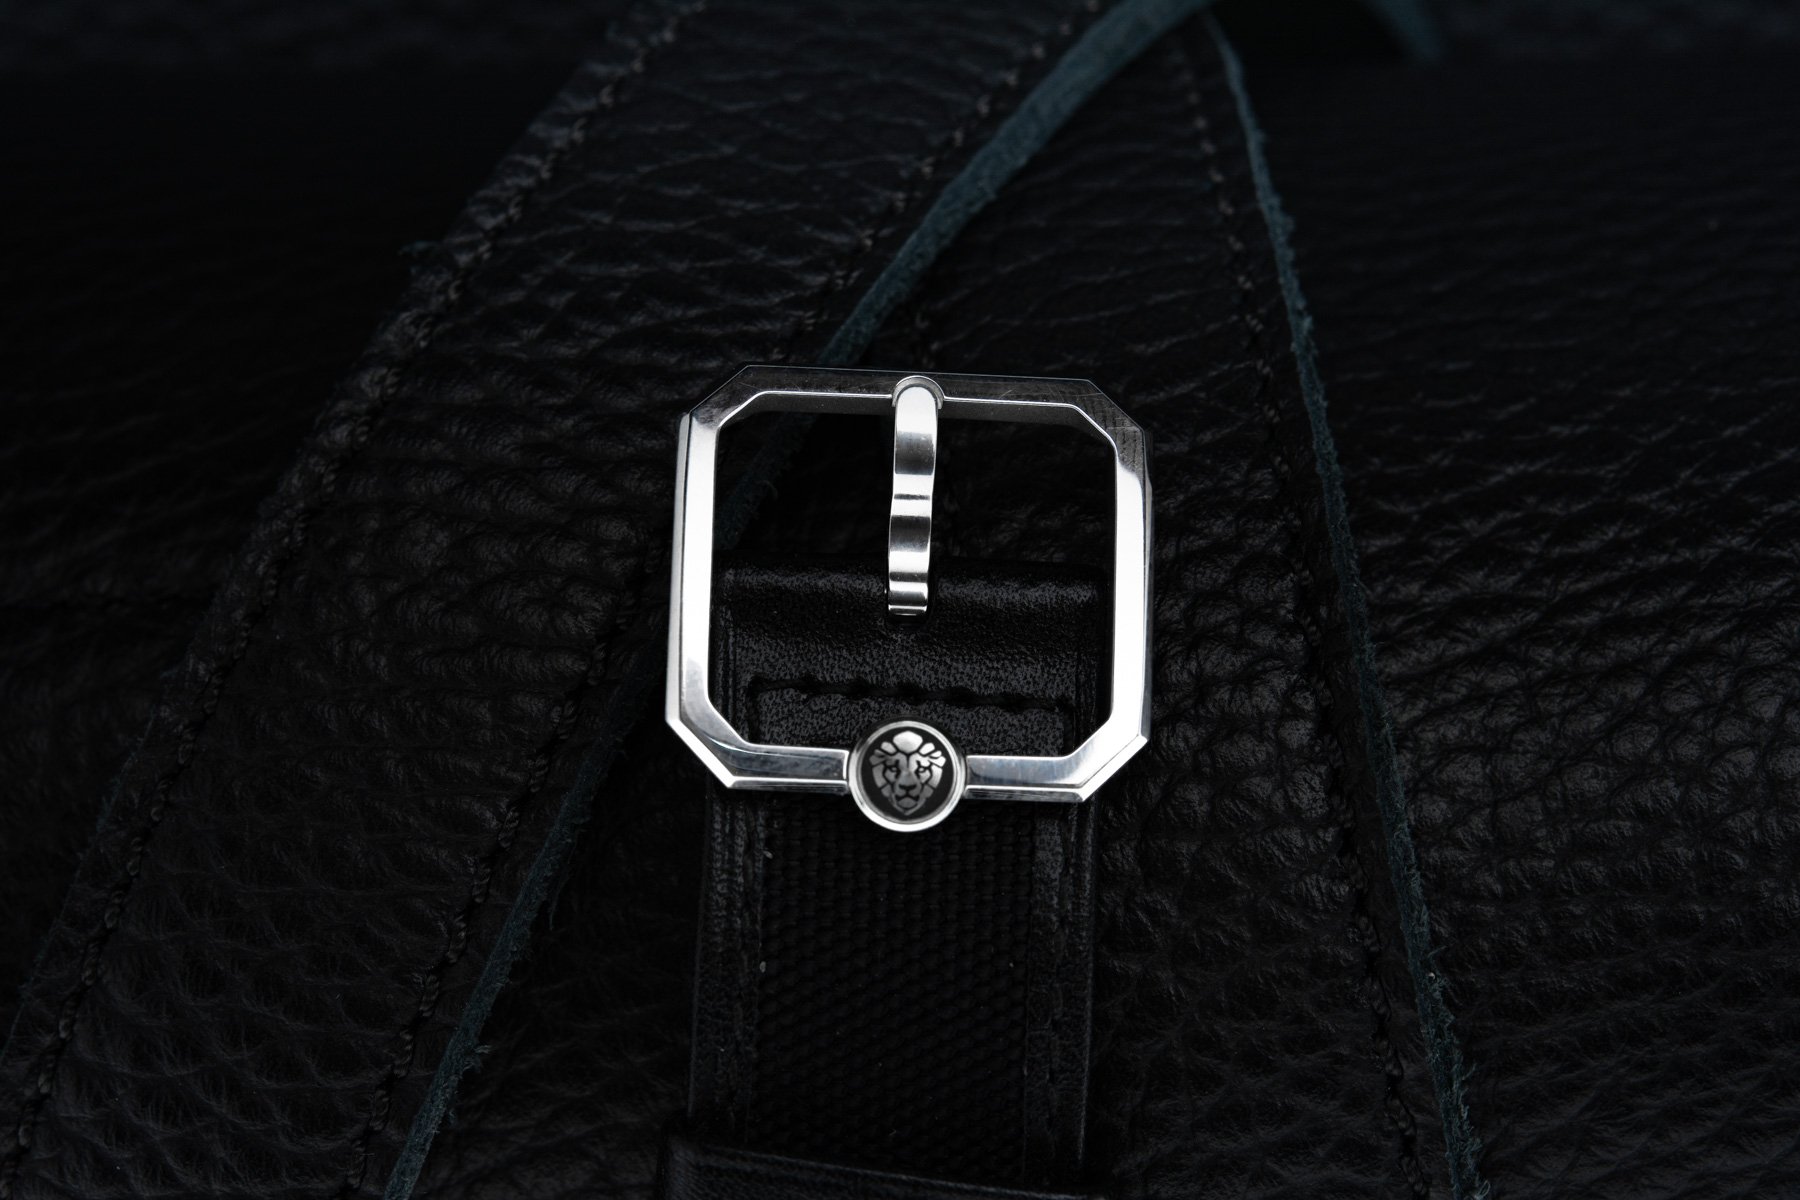 The New Chanel Monsieur. Superleggera Edition Watch (2021)